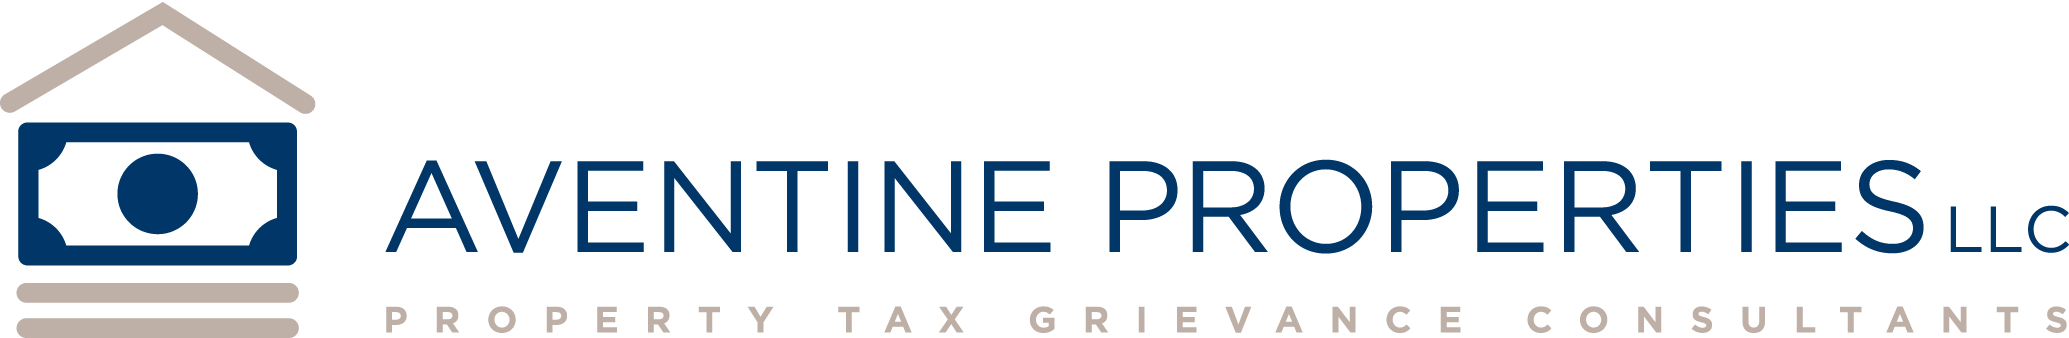 Aventine Properties LLC Tax Grievance Firm